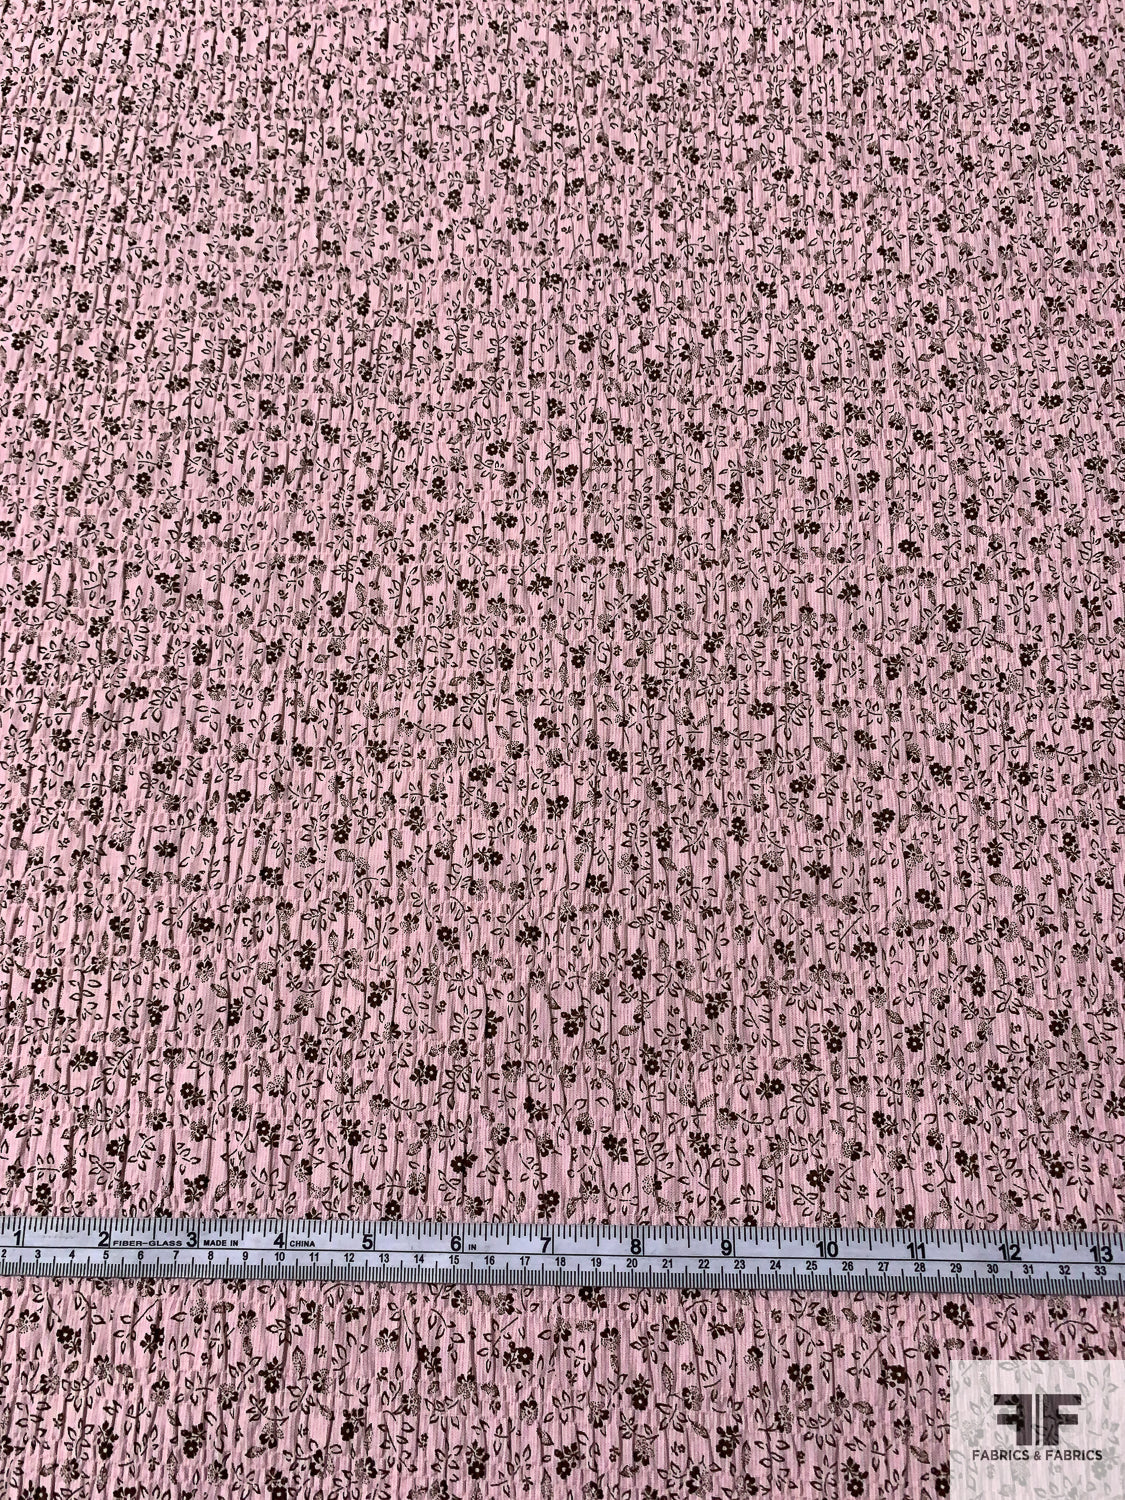 Ditsy Floral Printed Crinkled Cotton Lawn - Crepe Pink / Eggplant Brown